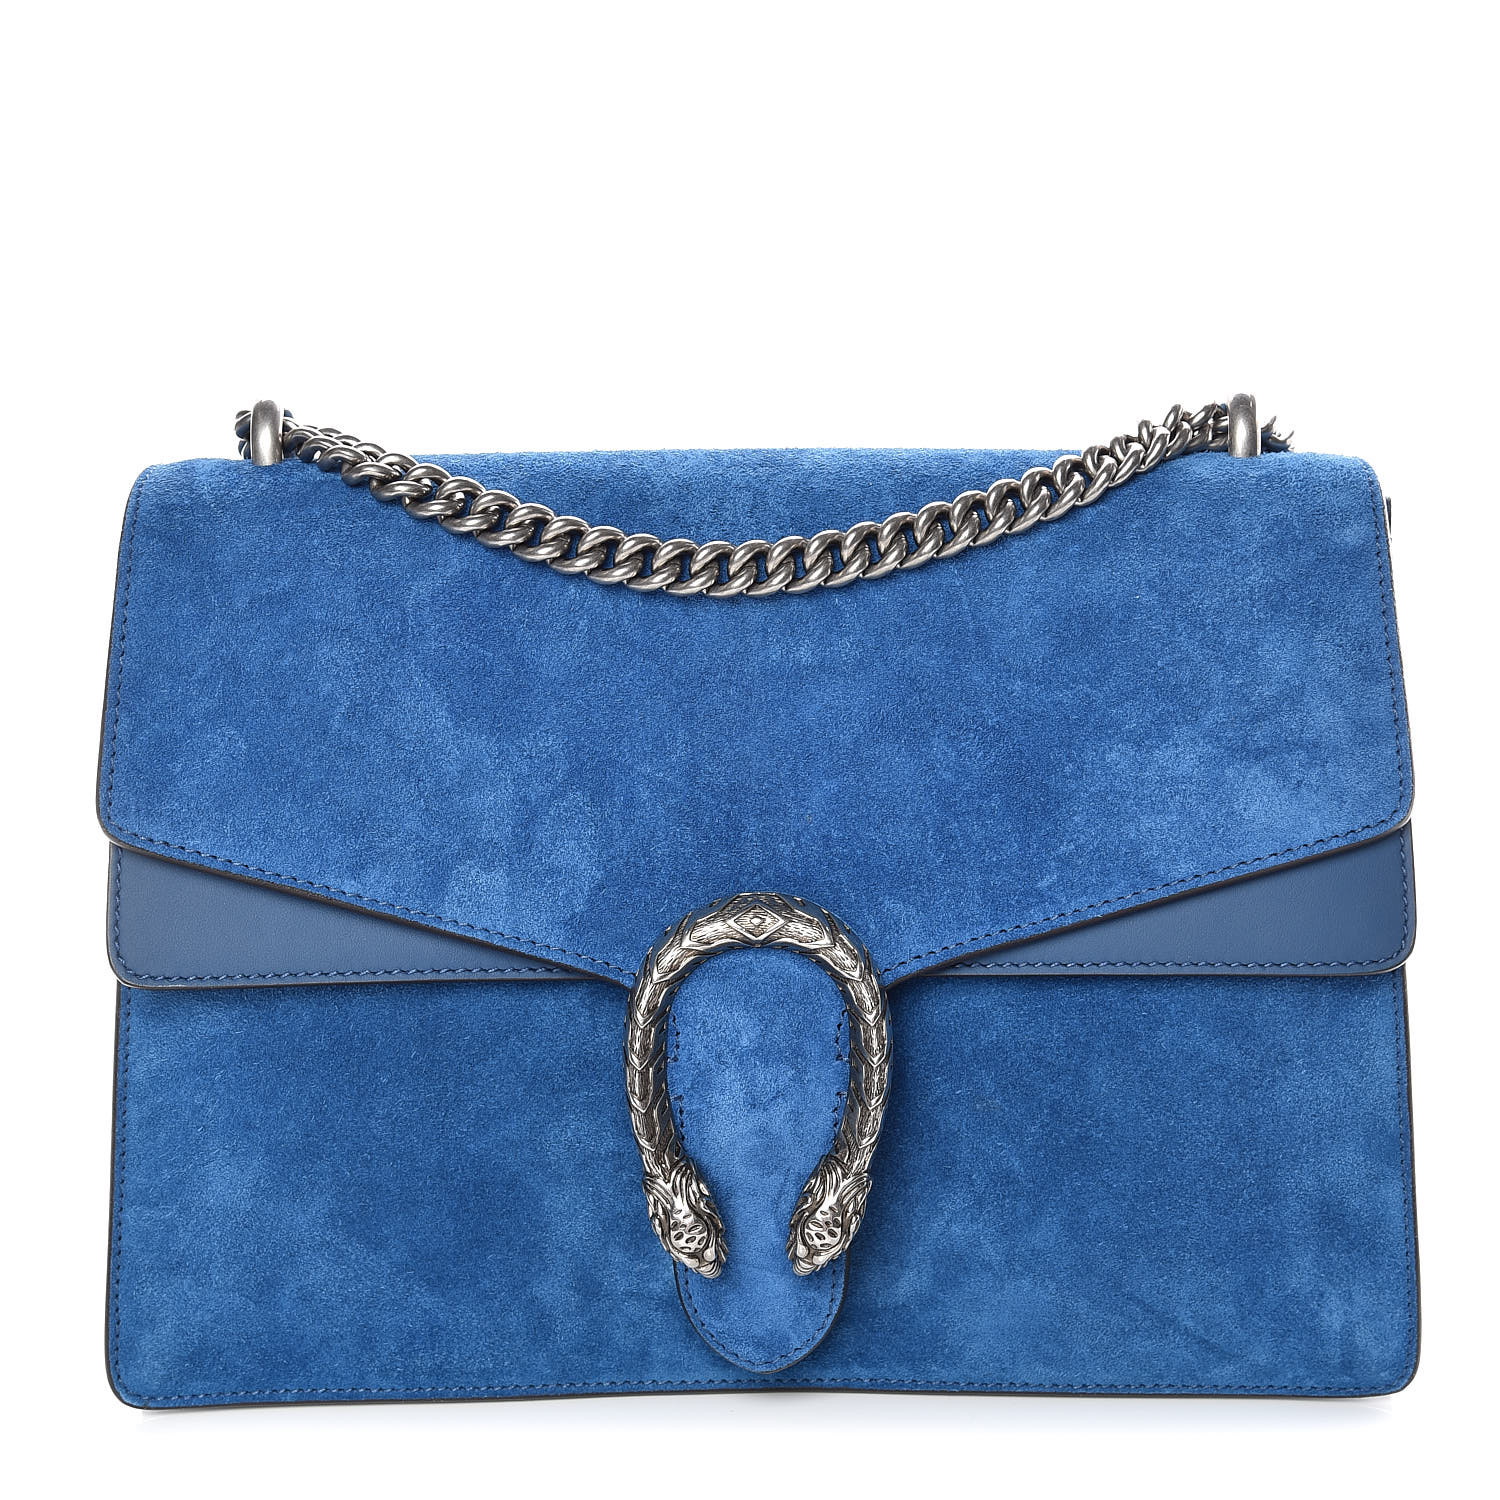 GUCCI Suede Medium Dionysus Shoulder Bag Blue 394770